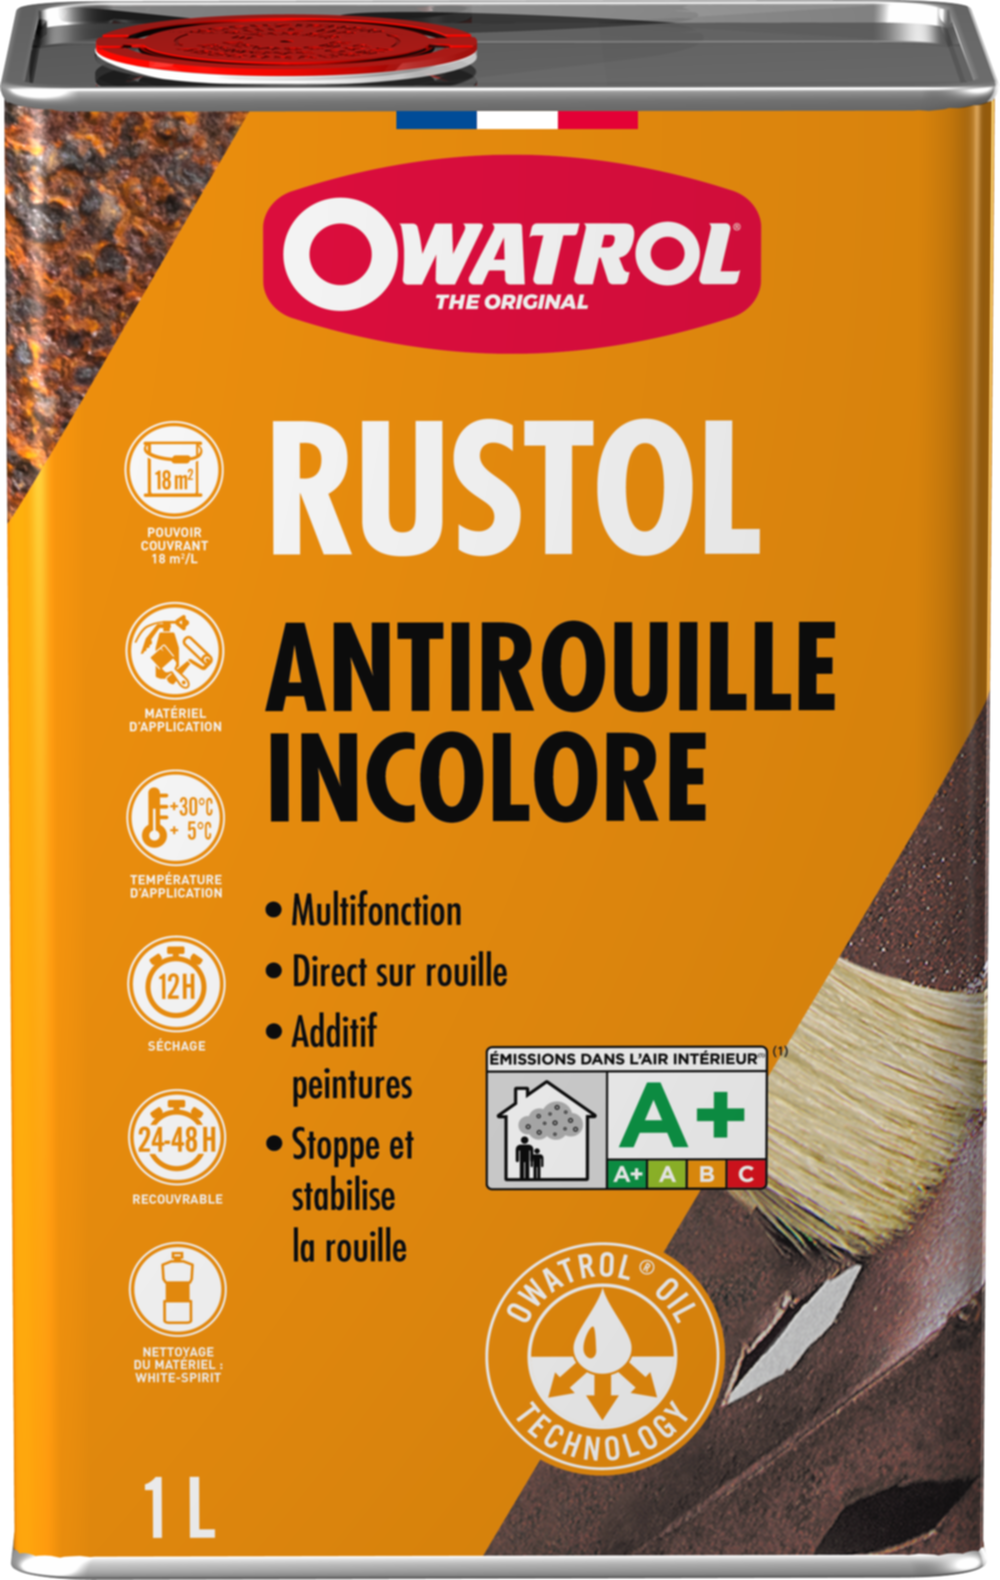 Rustol antirouille incolore multifonction 1L - OWATROL